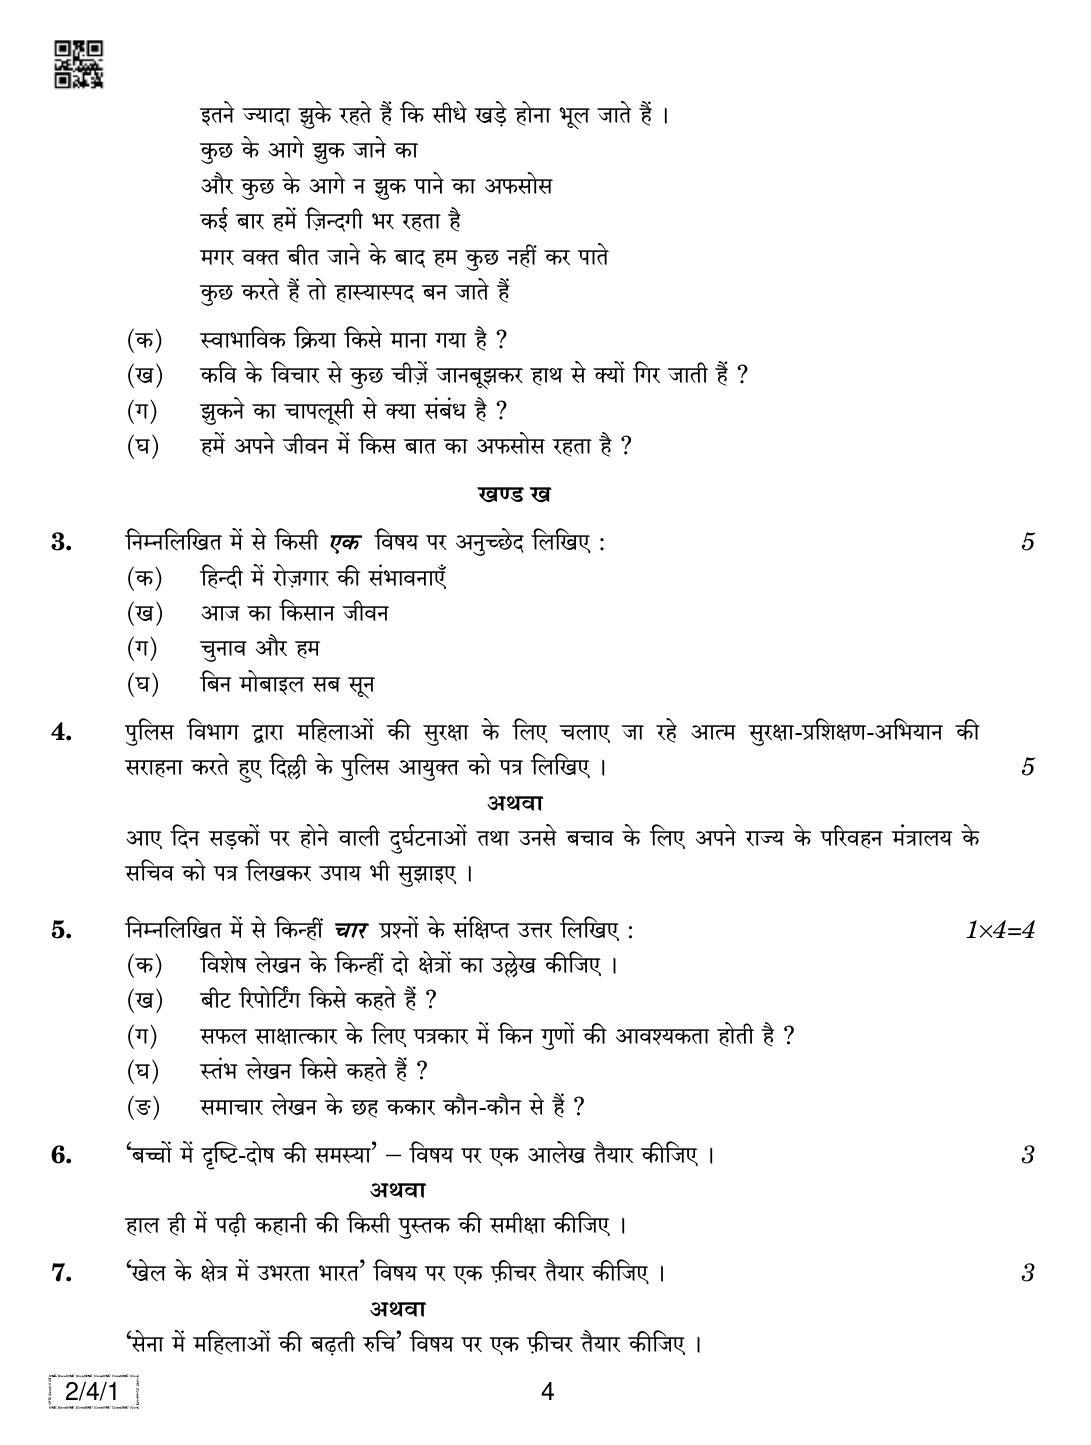 CBSE Class 12 2-4-1 Hindi Core 2019 Question Paper - Page 4